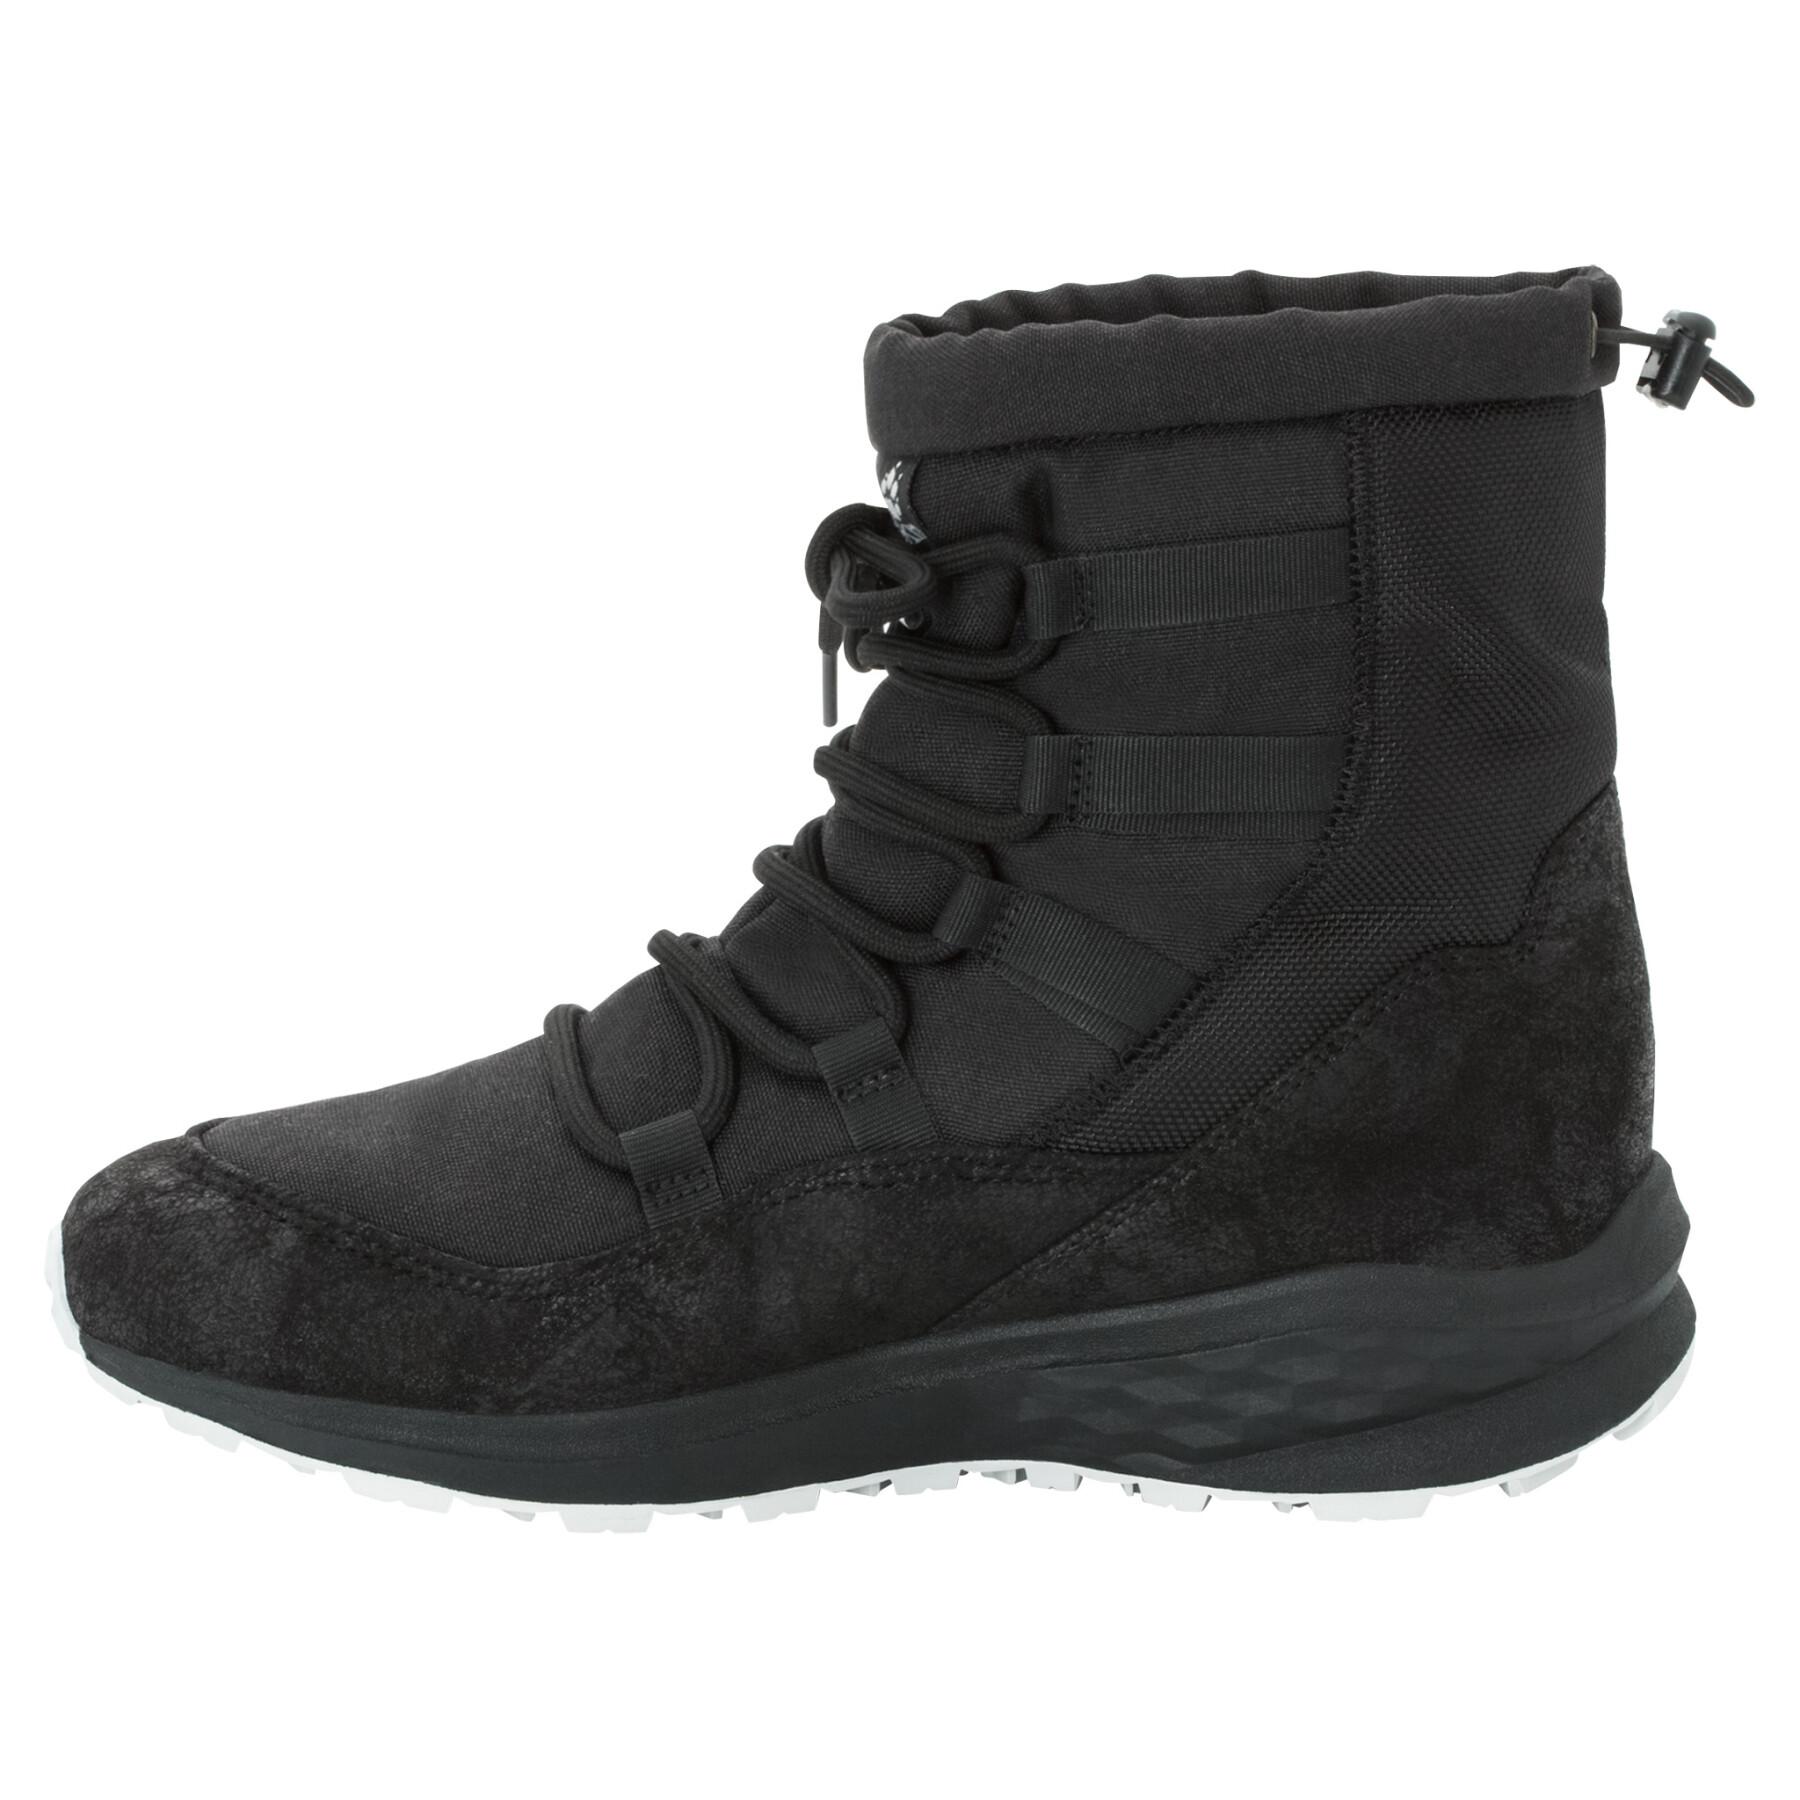 Women's boots Jack Wolfskin nevada texapore mid